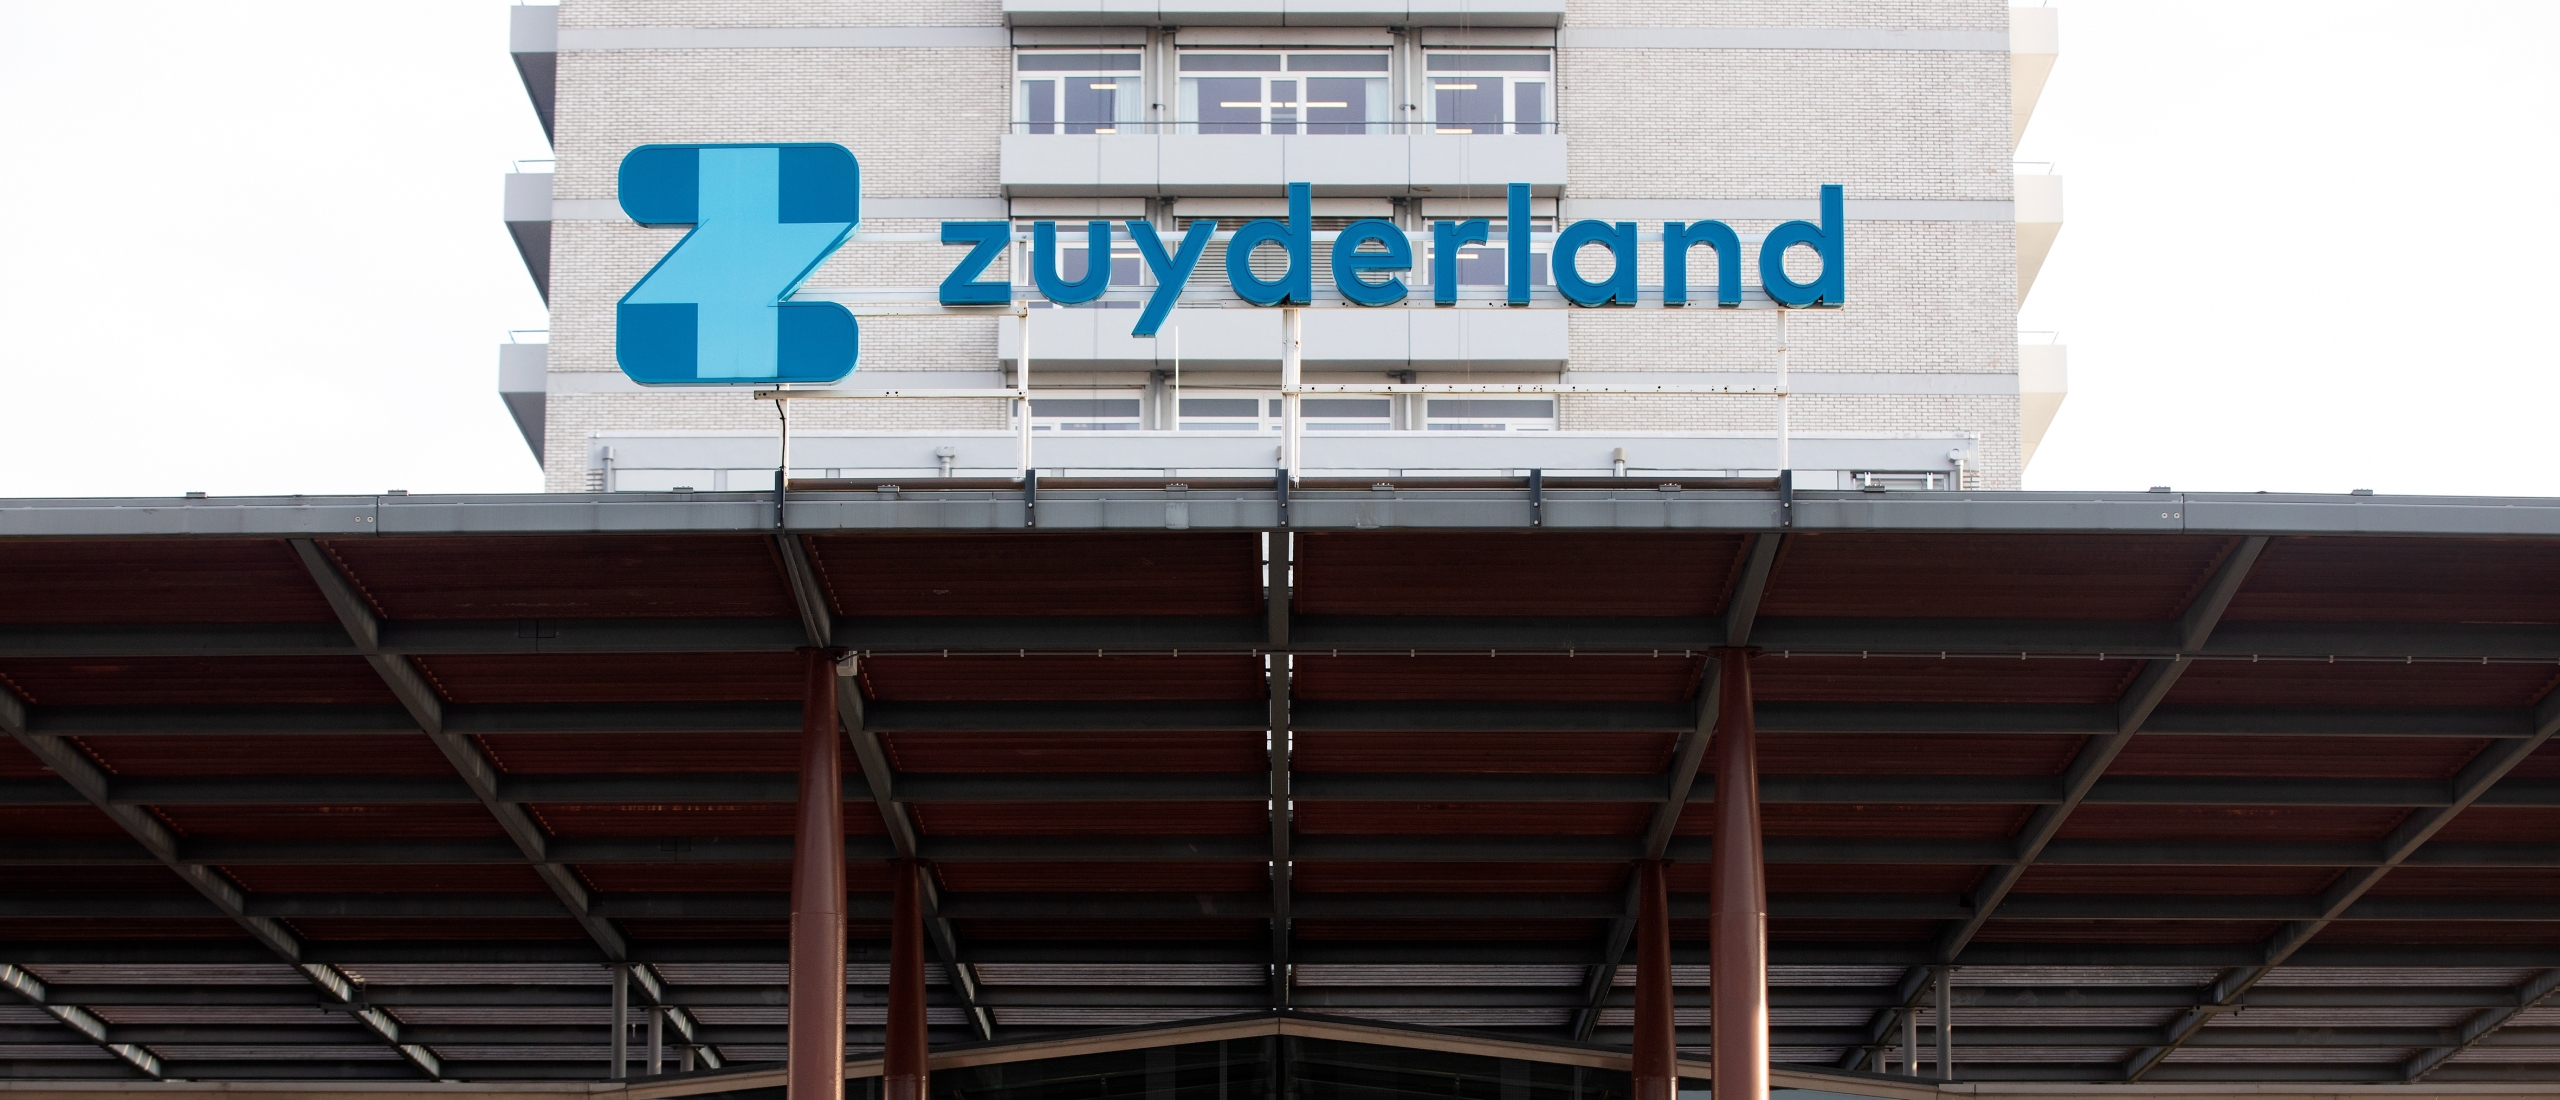 Ook Valkenburg wil behoud spoedeisende hulp Zuyderland in Heerlen